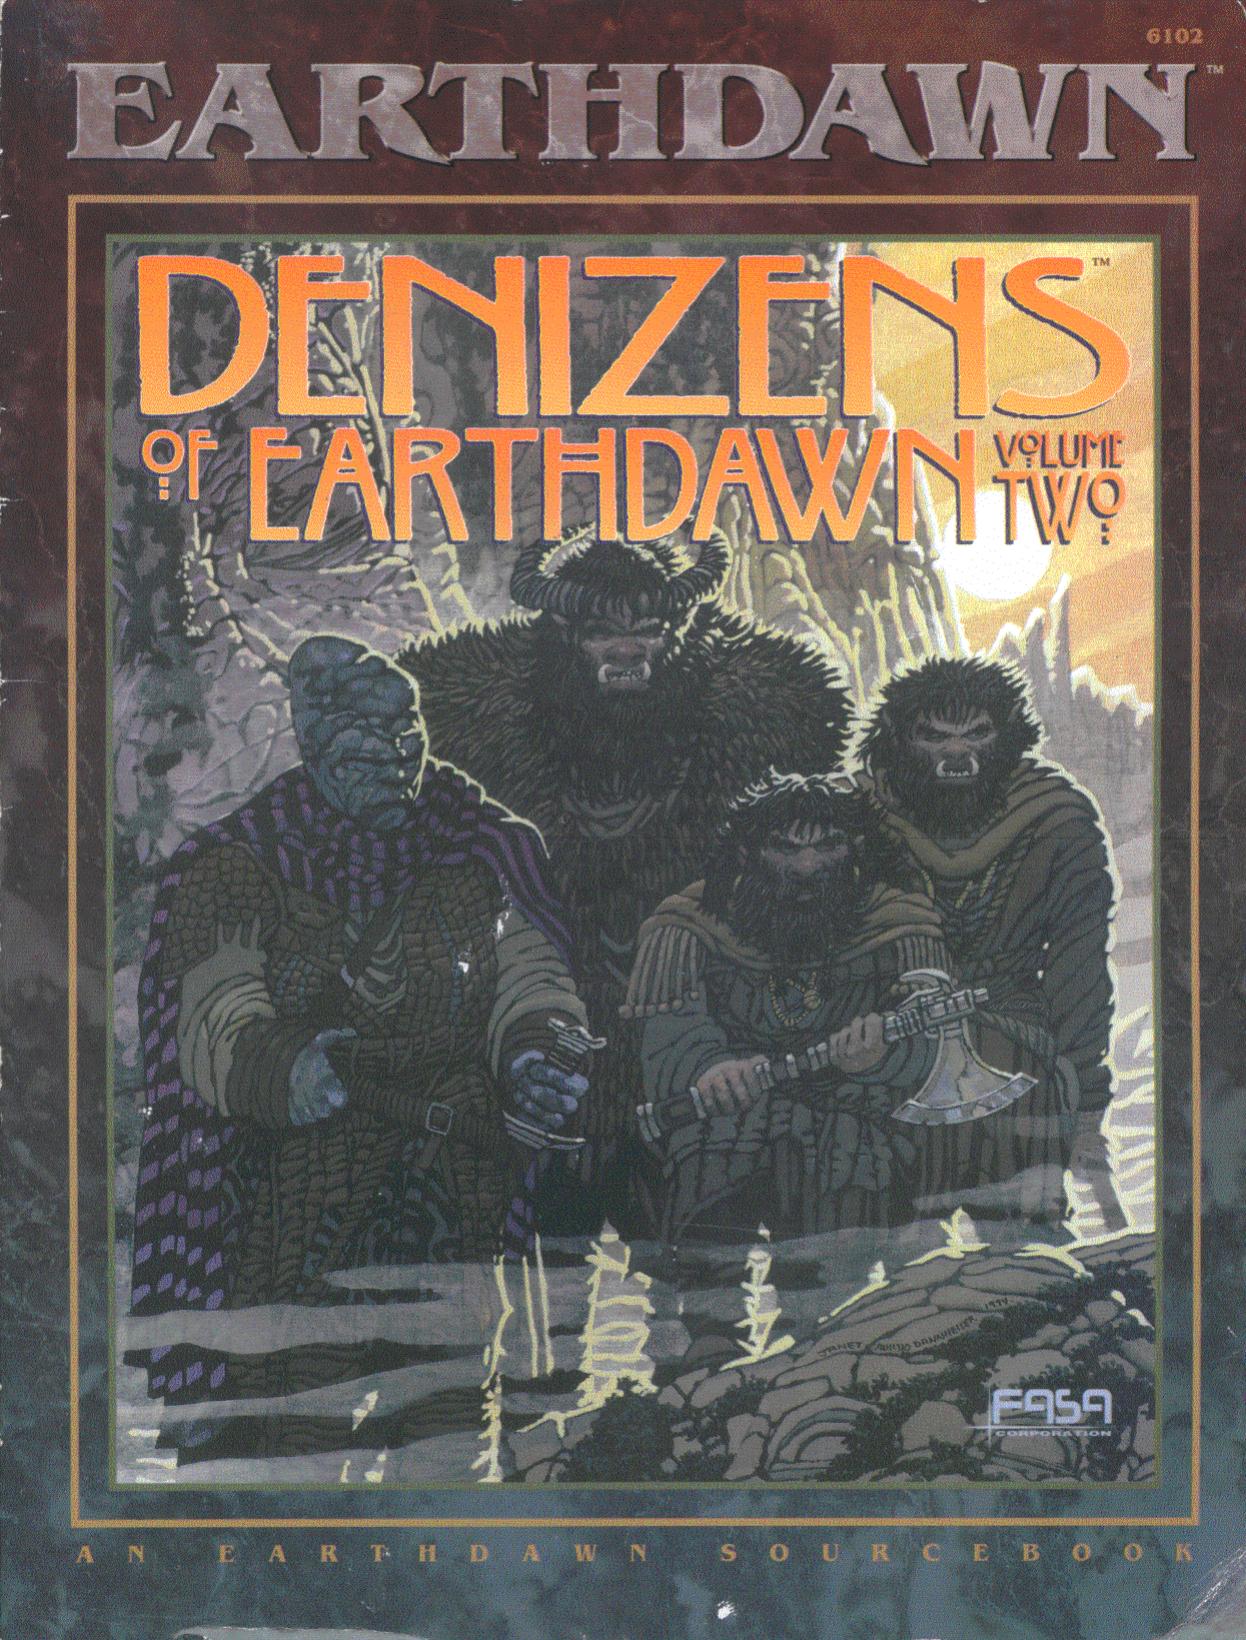 6102 Denizens of Earthdawn - Volume 2